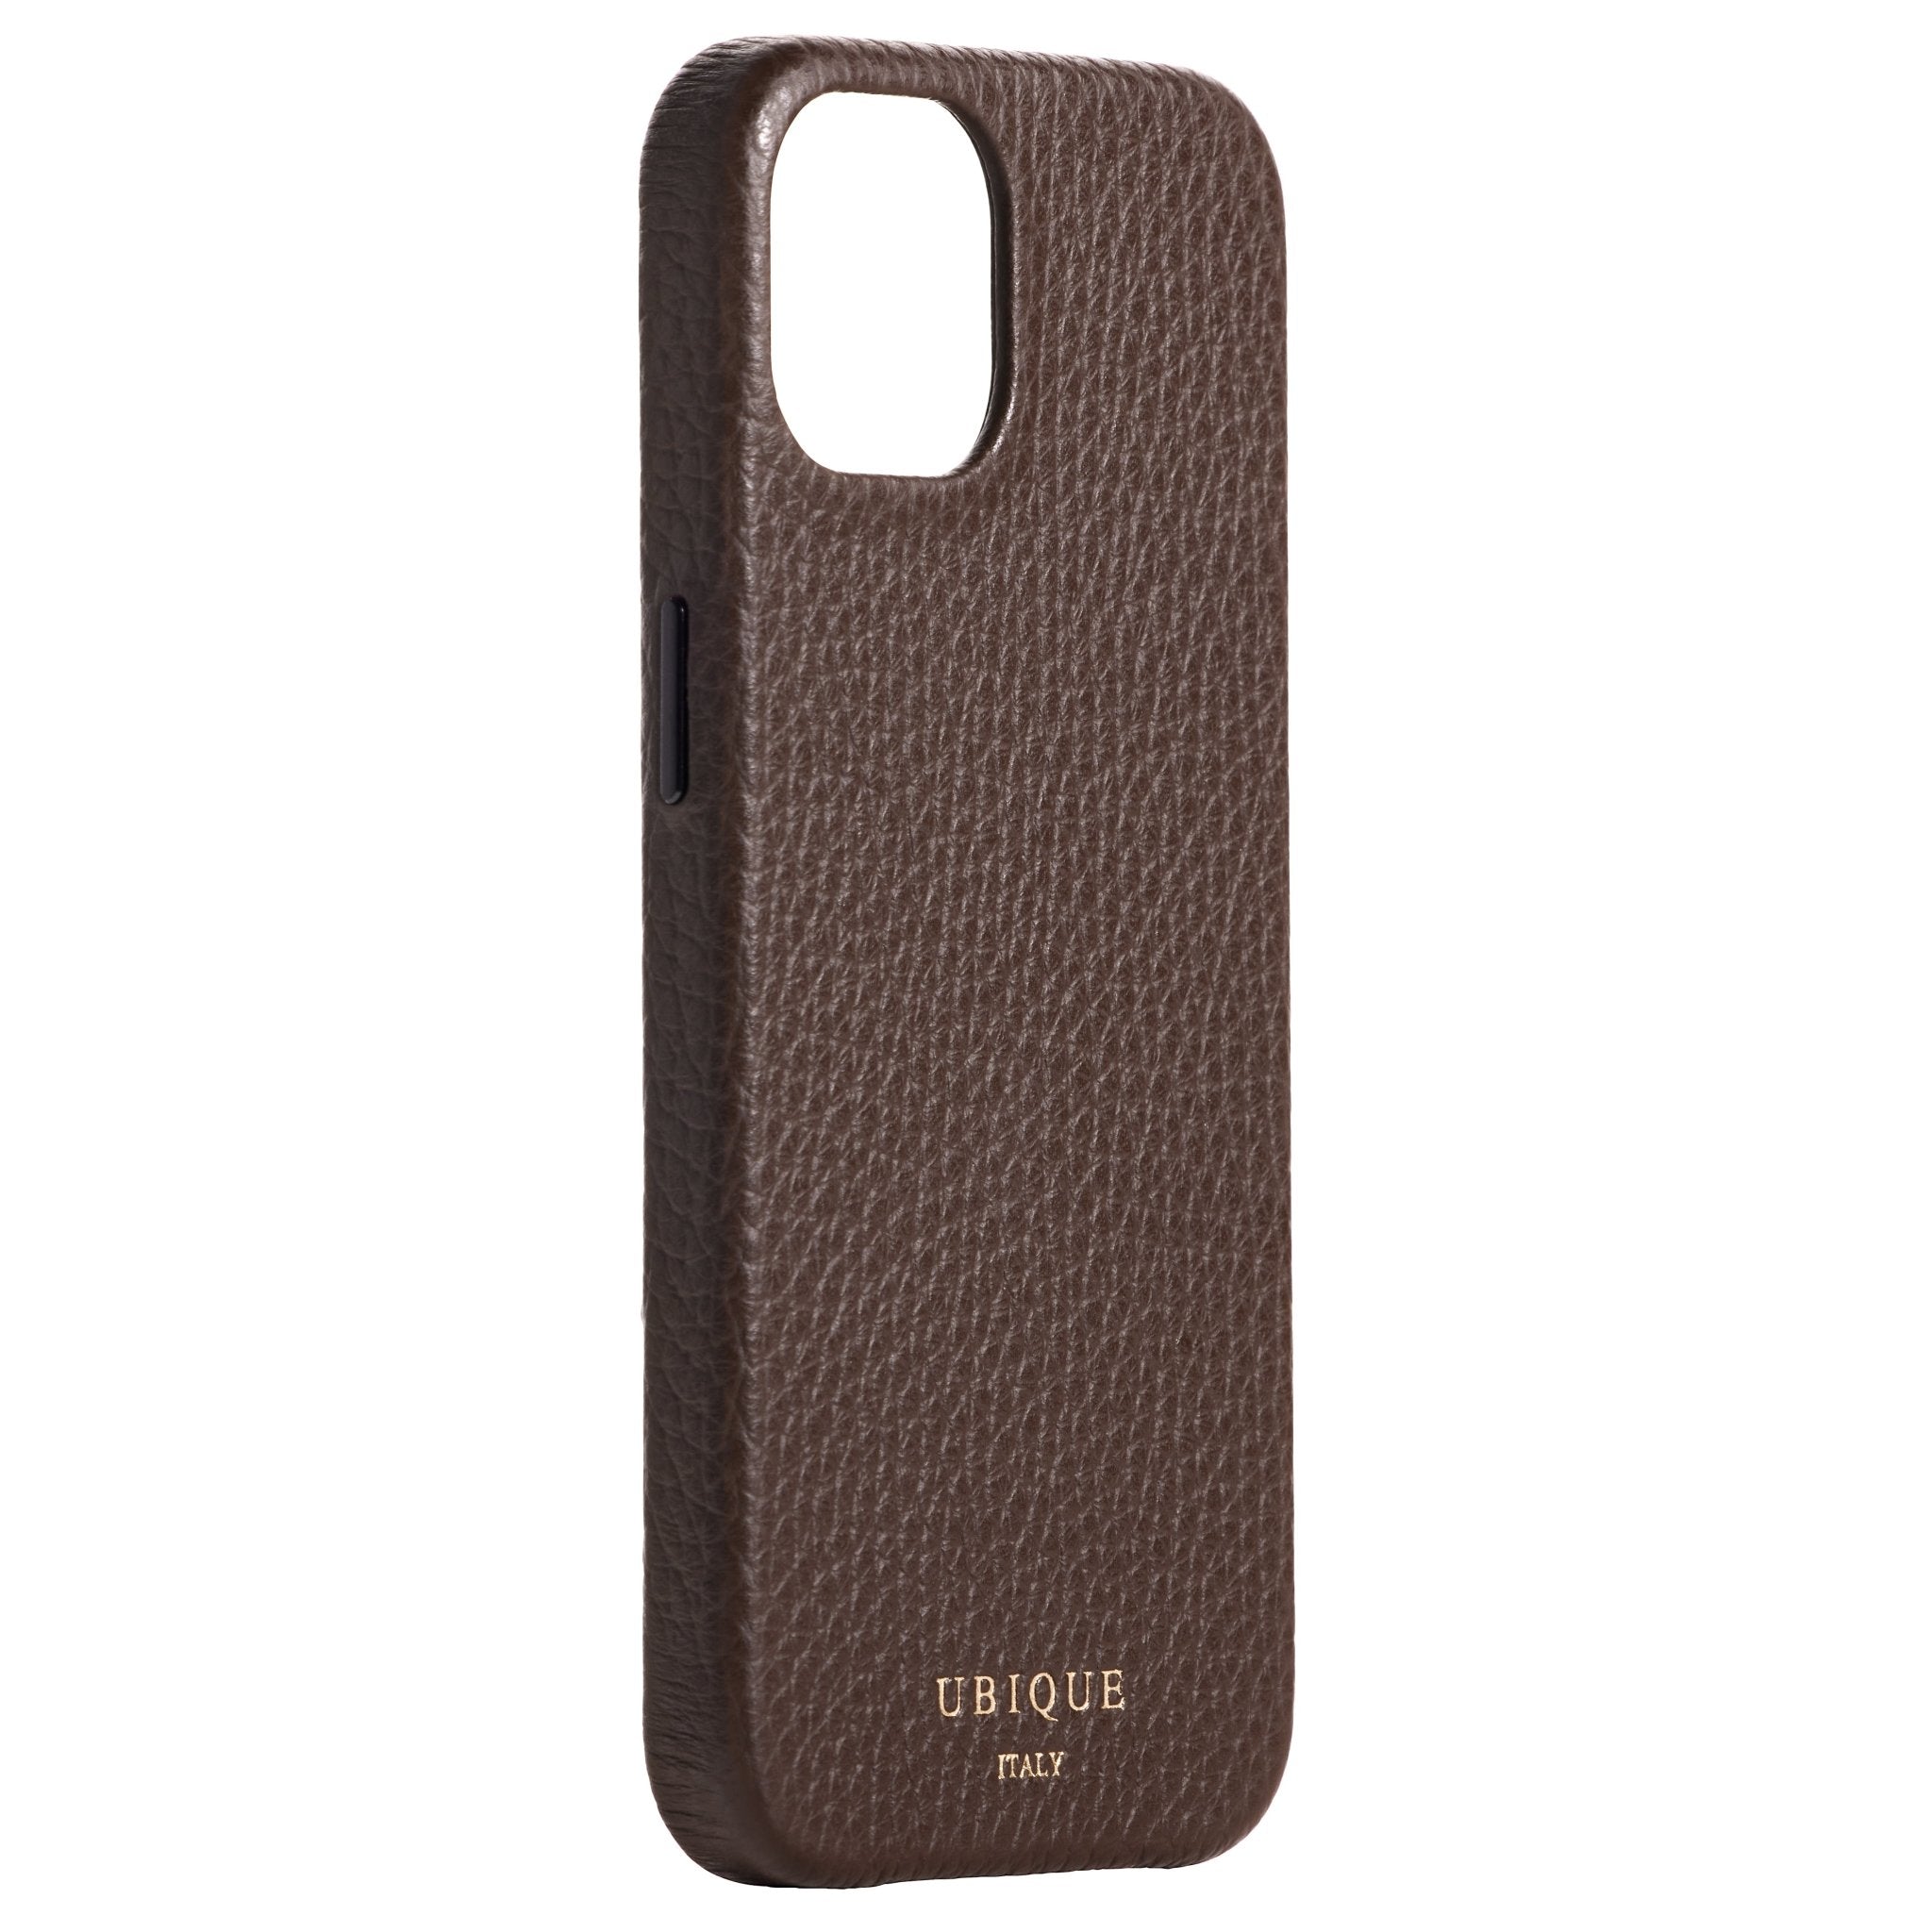 Ubique Italy Luxury iPhone Case 13 Pebble Grain Leather Dark Walnut Angled